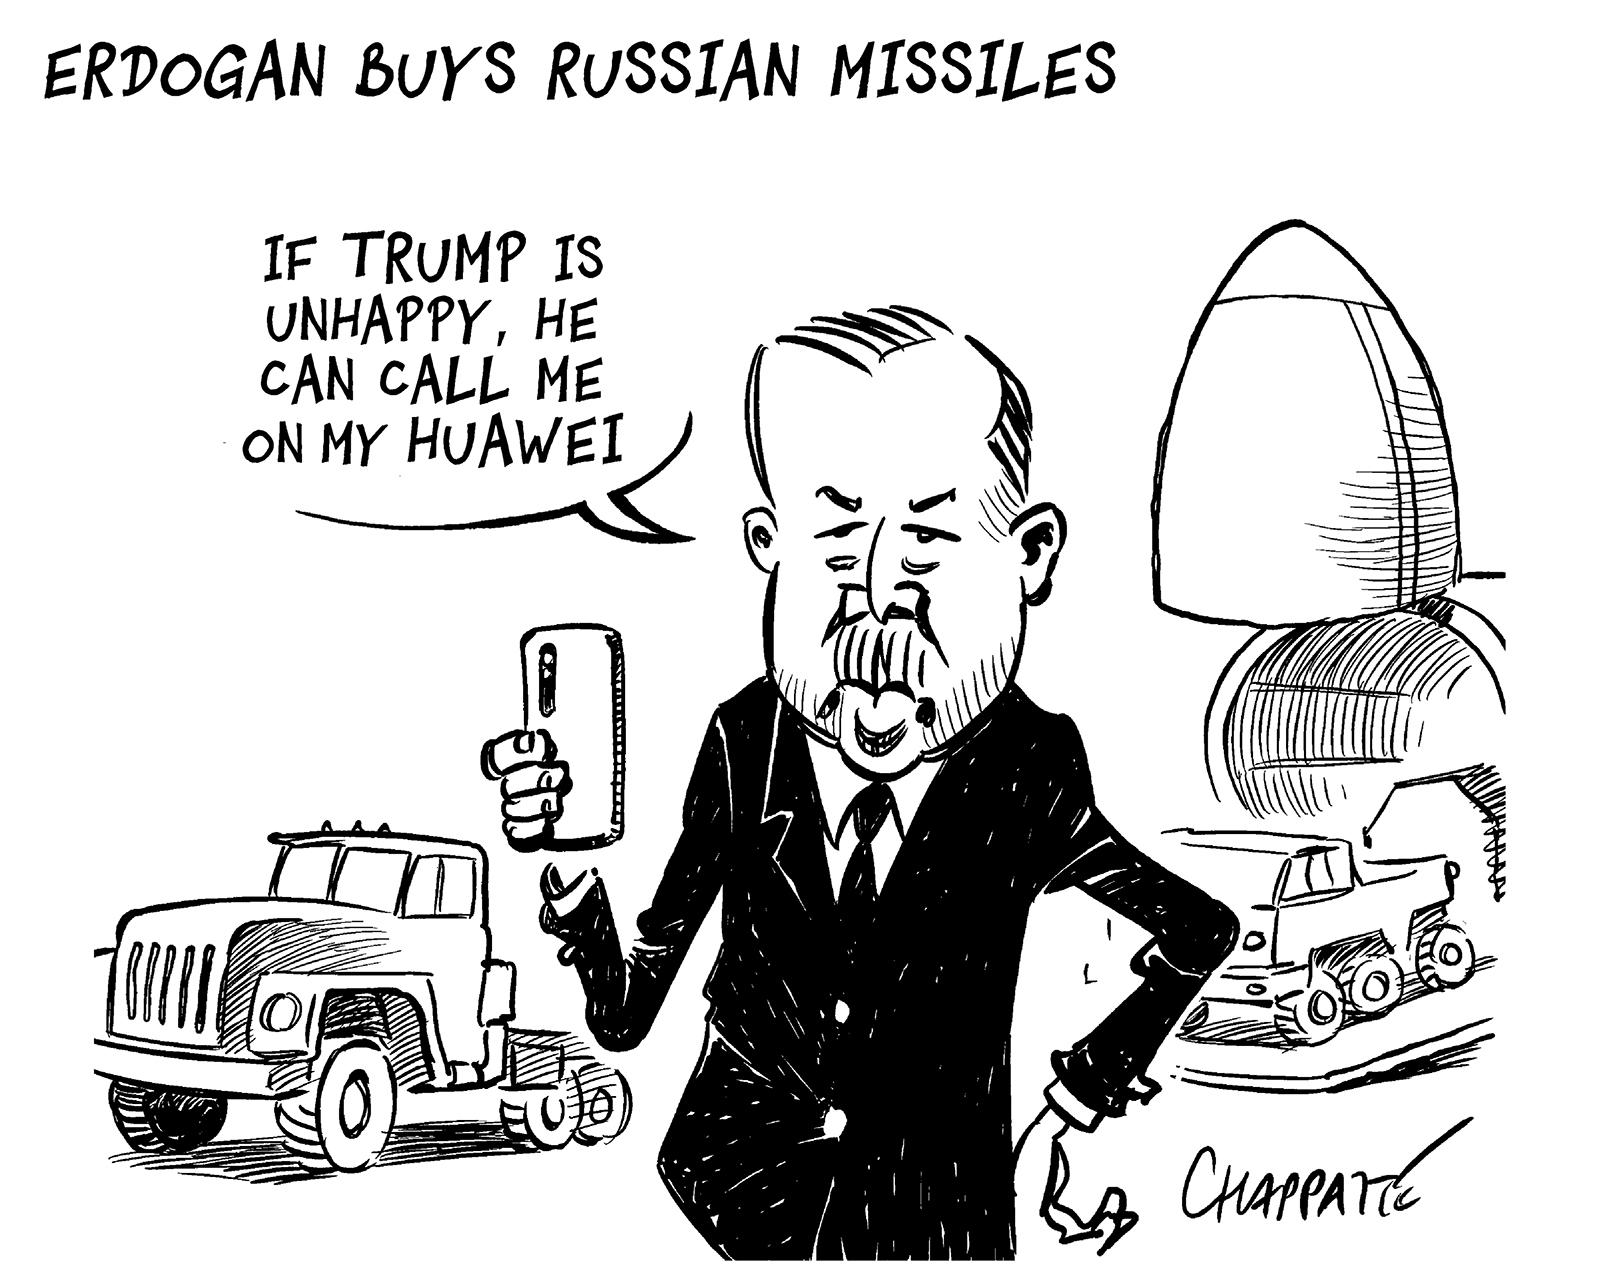 Erdogan buys Russian missiles